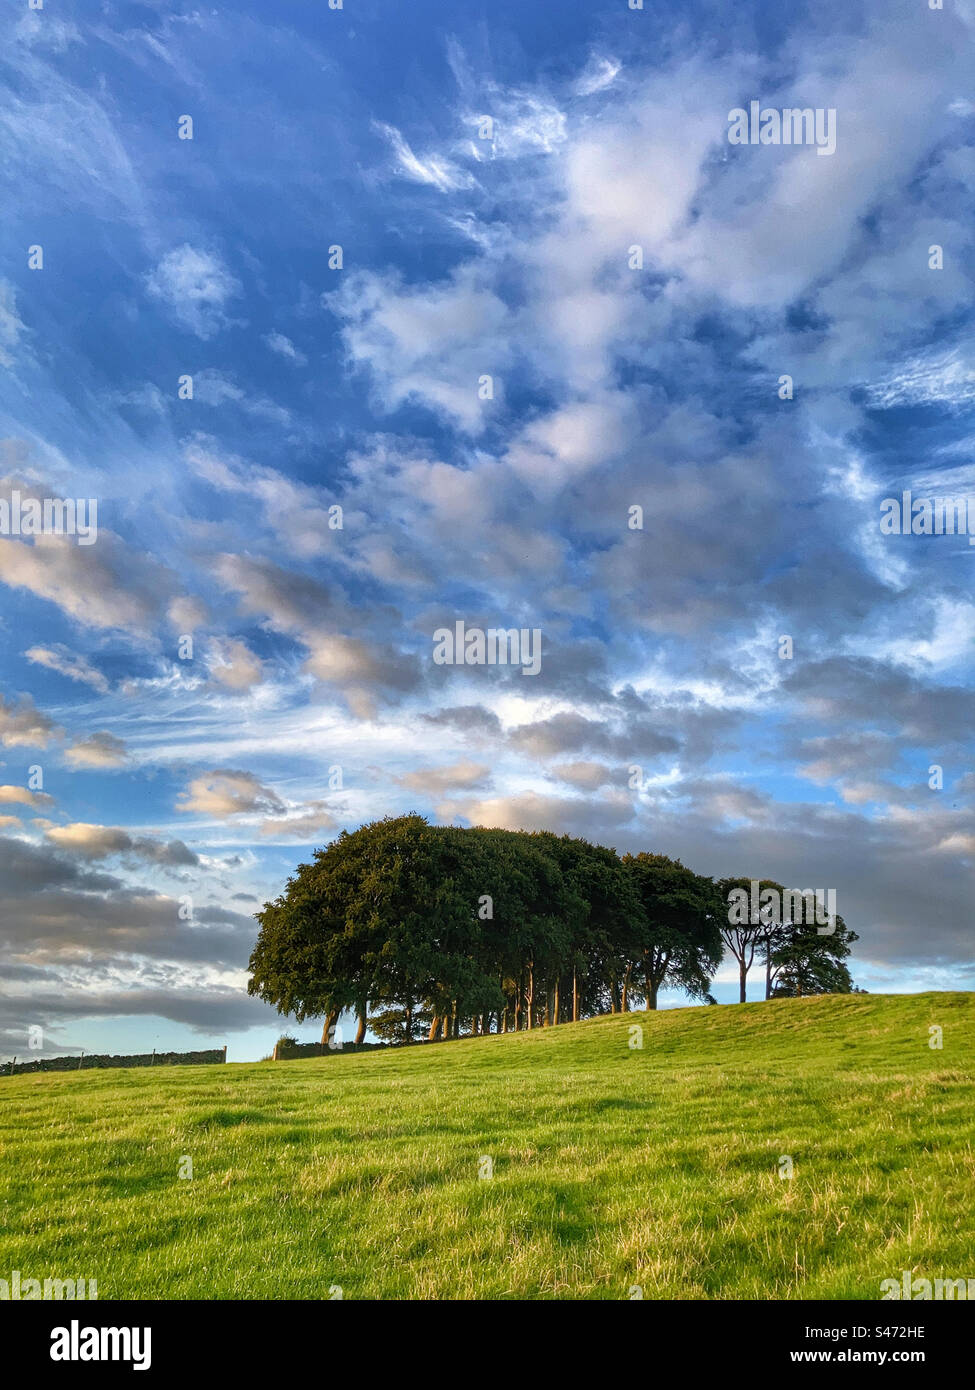 Die Elefantenbäume Guiseley West Yorkshire Stockfoto